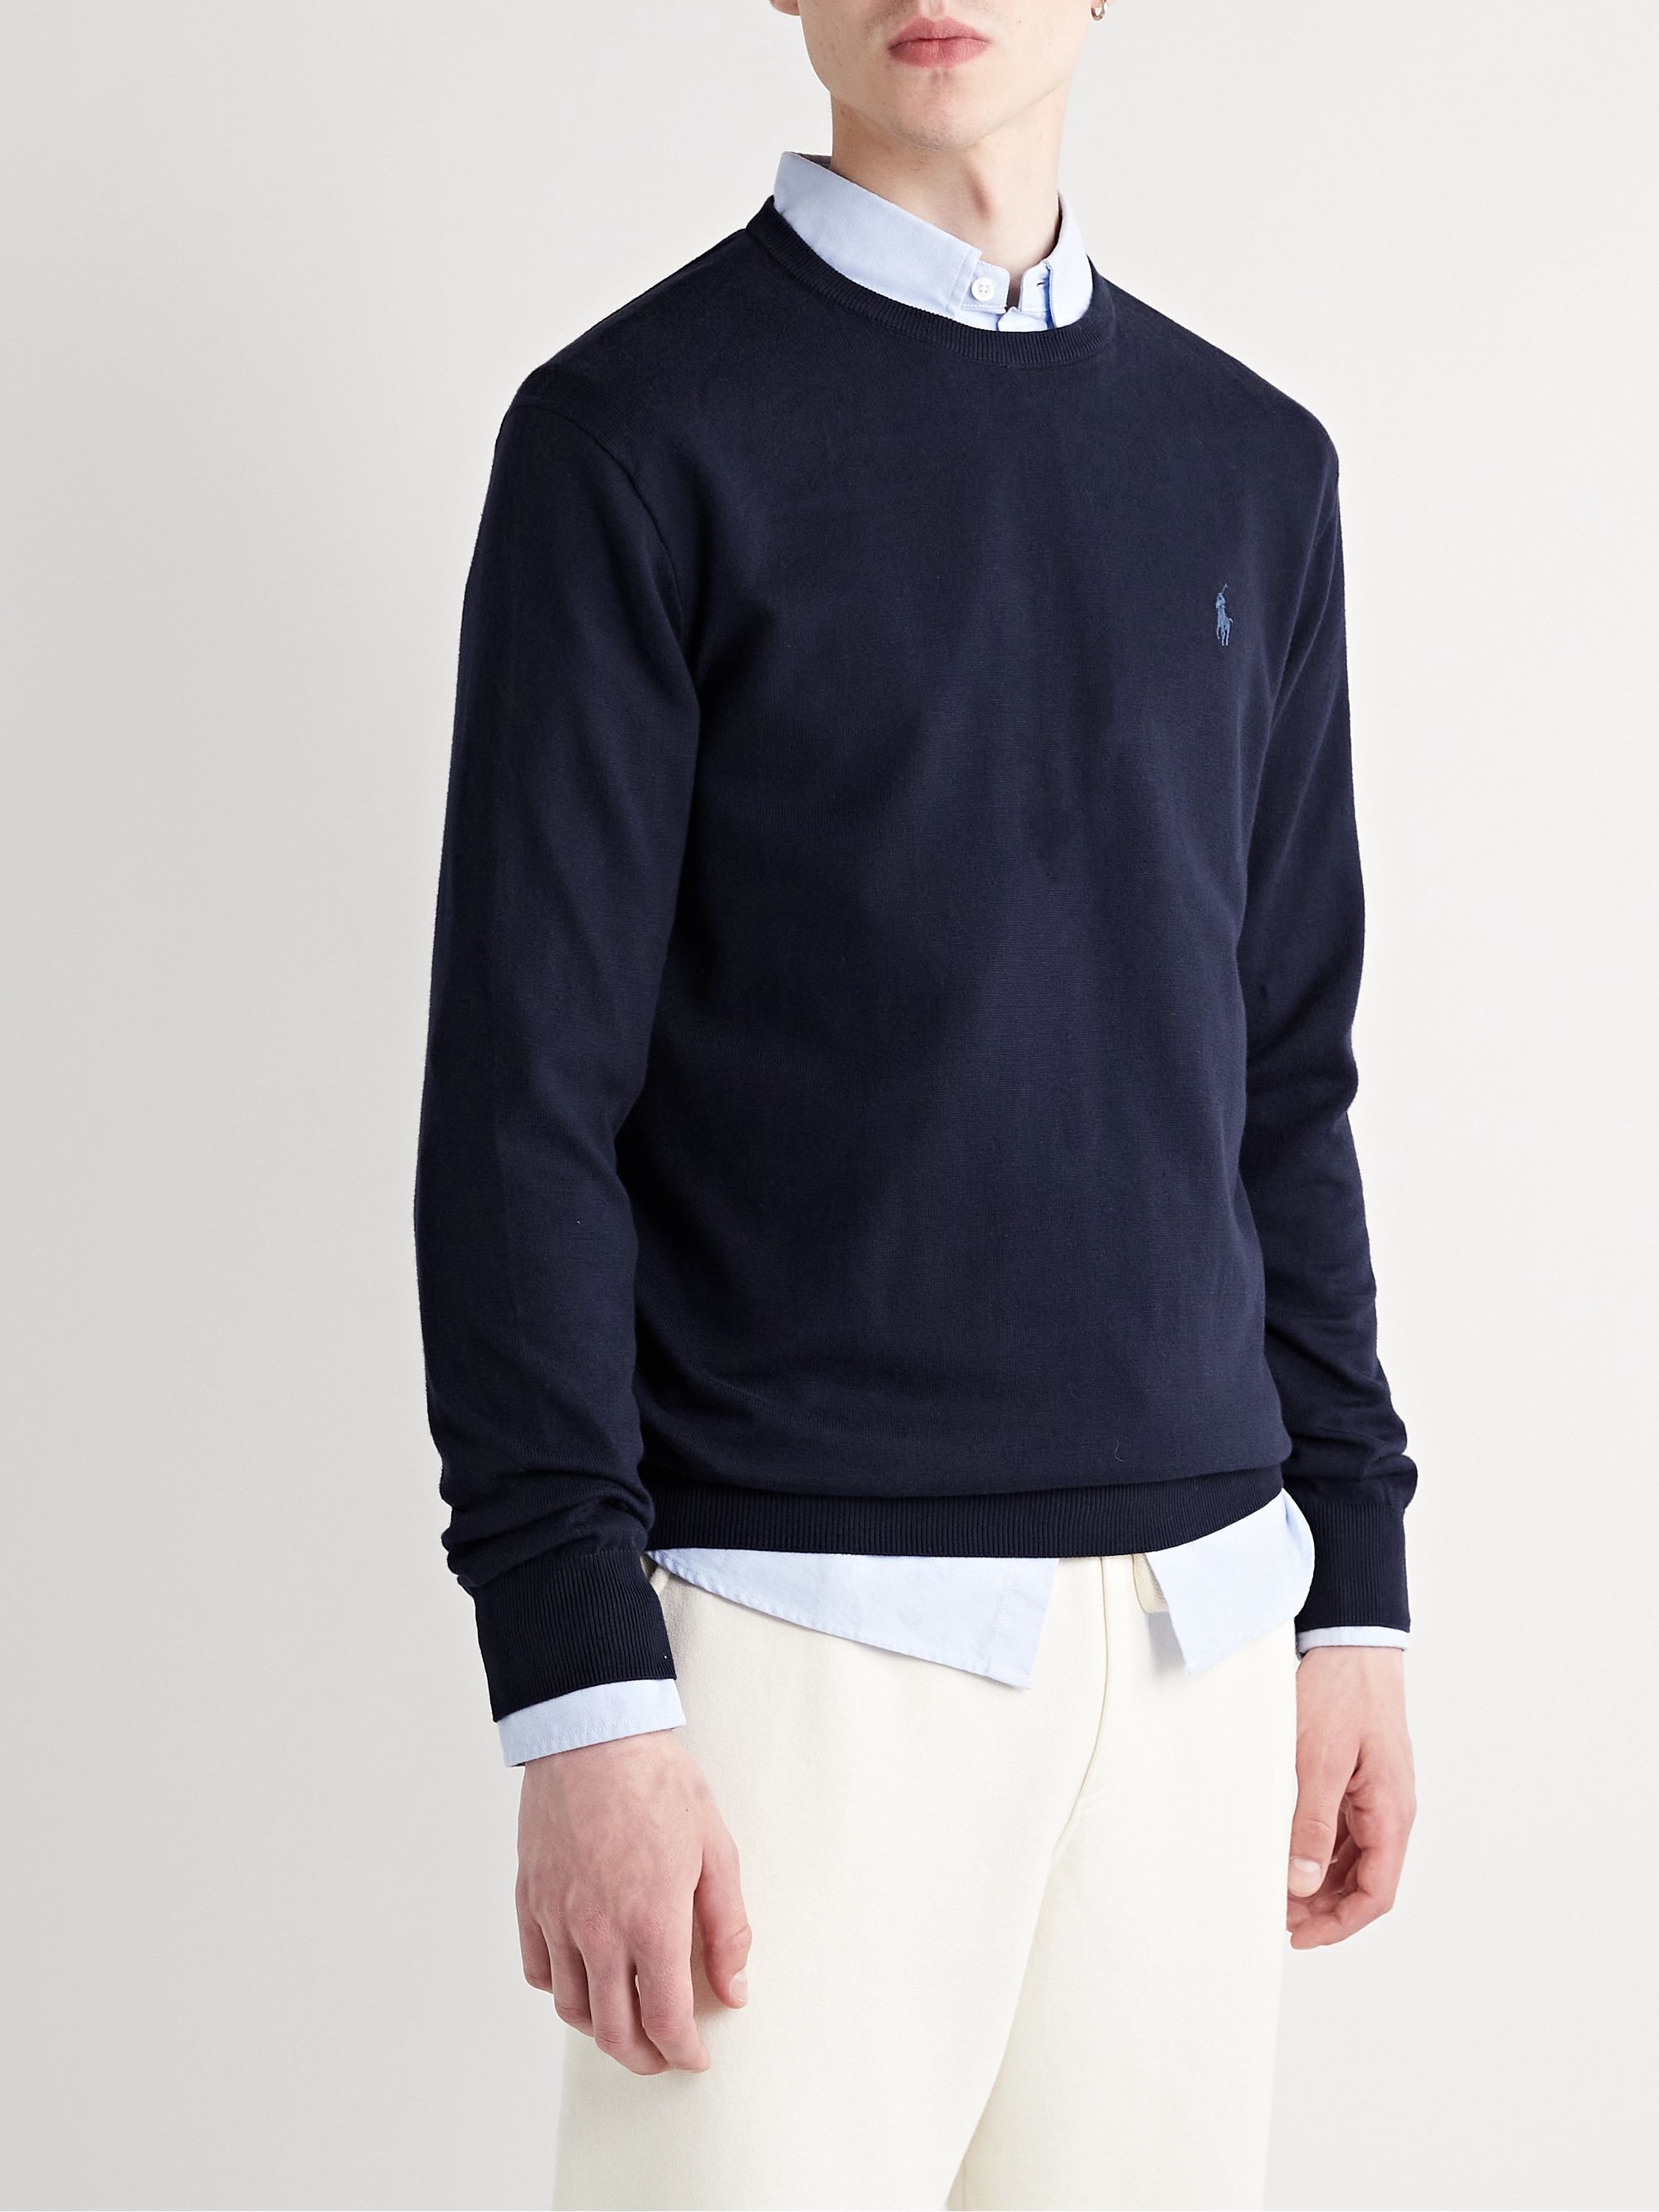 Navy Slim-Fit Pima Cotton Sweater | POLO RALPH LAUREN | MR PORTER